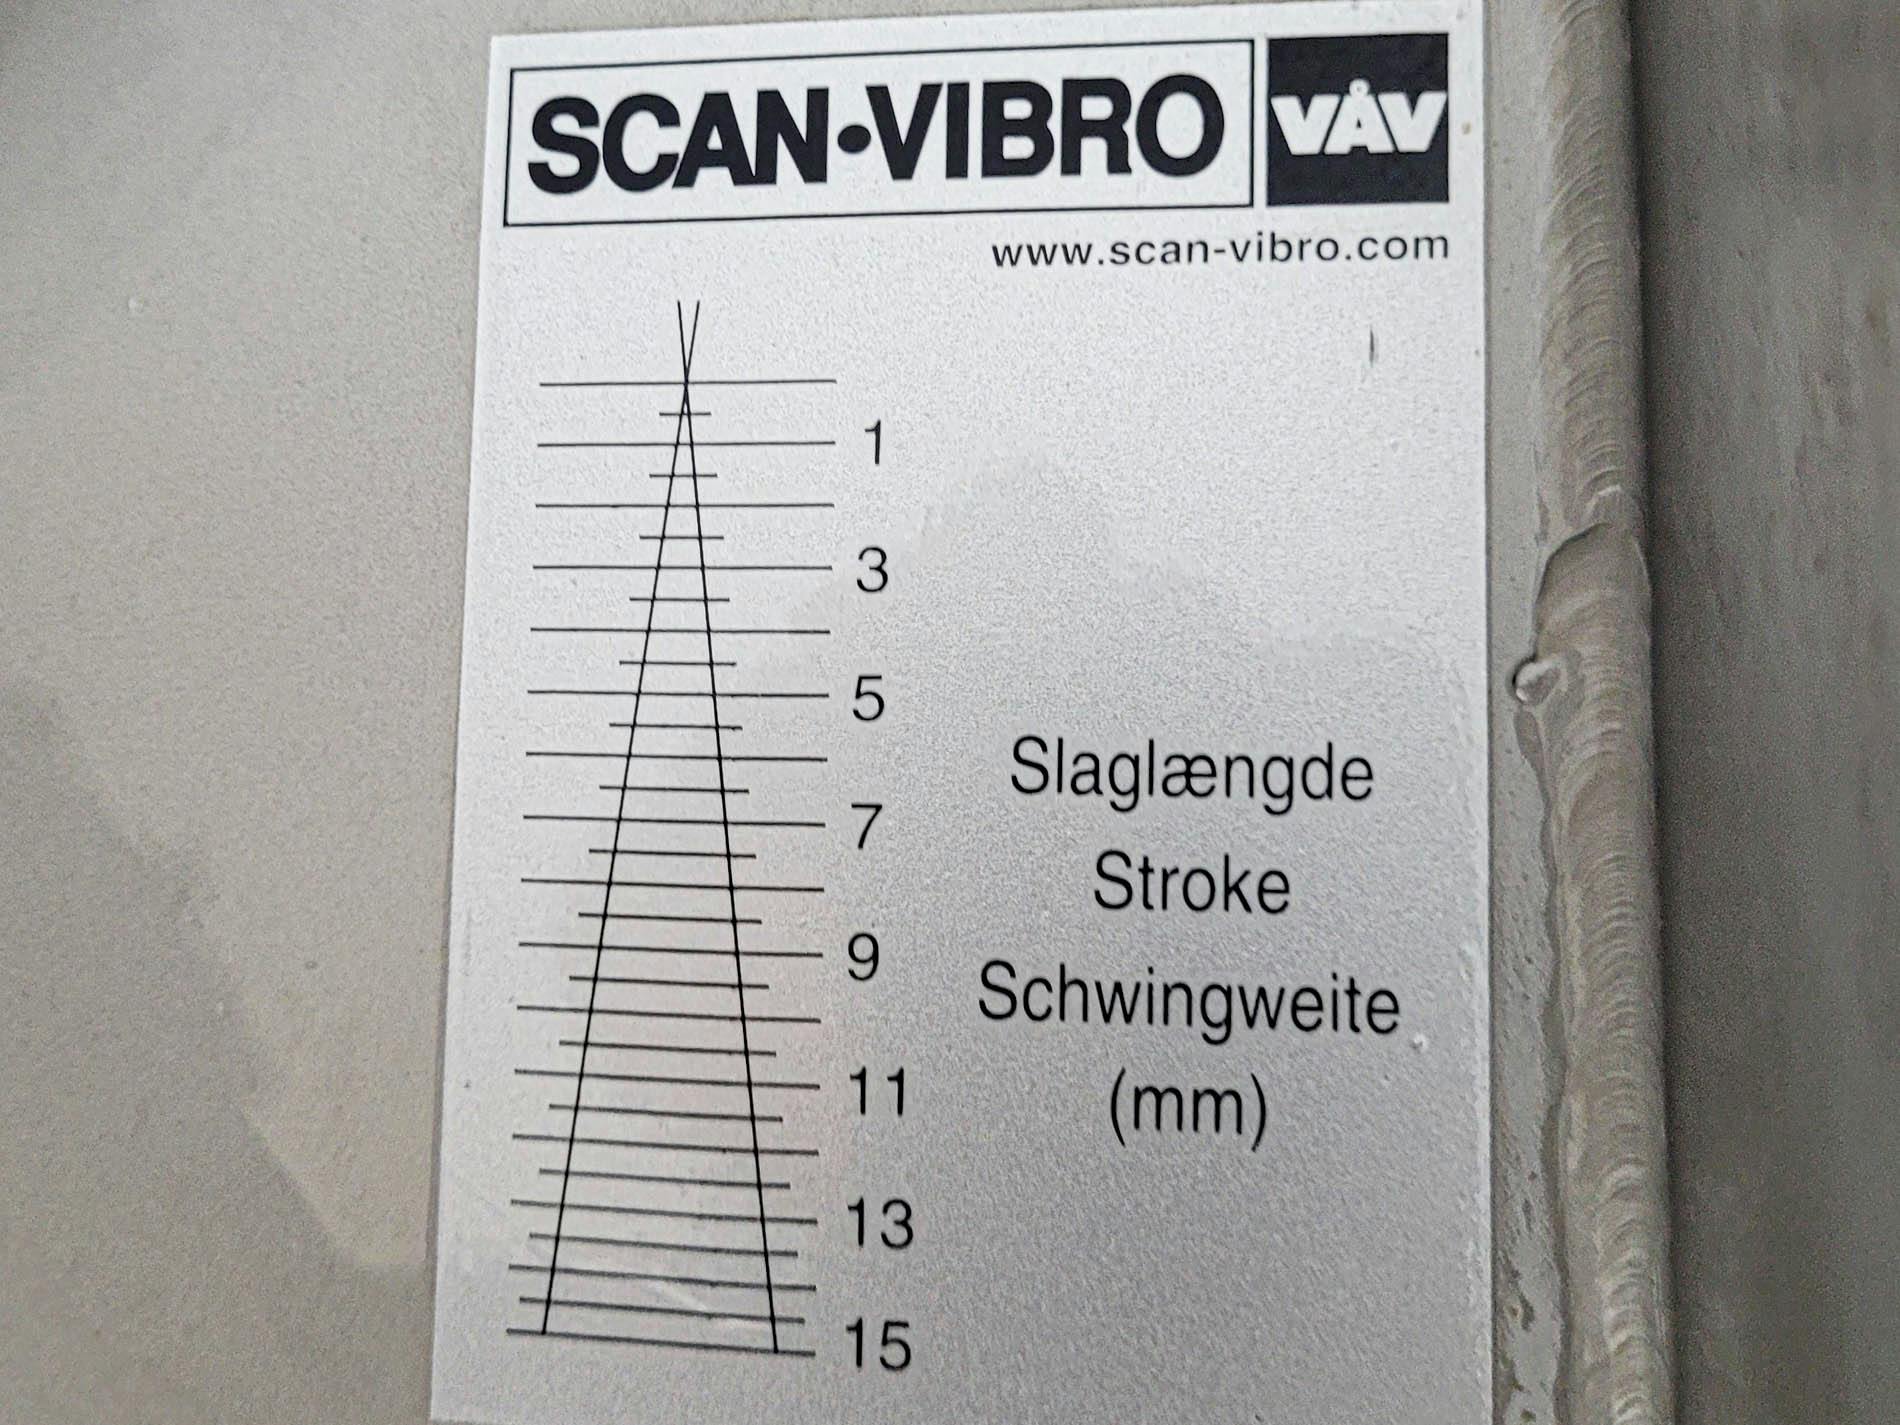 VAV Scan-Vibro TRS 300 x 1019 - Alimentador vibrantes - image 10